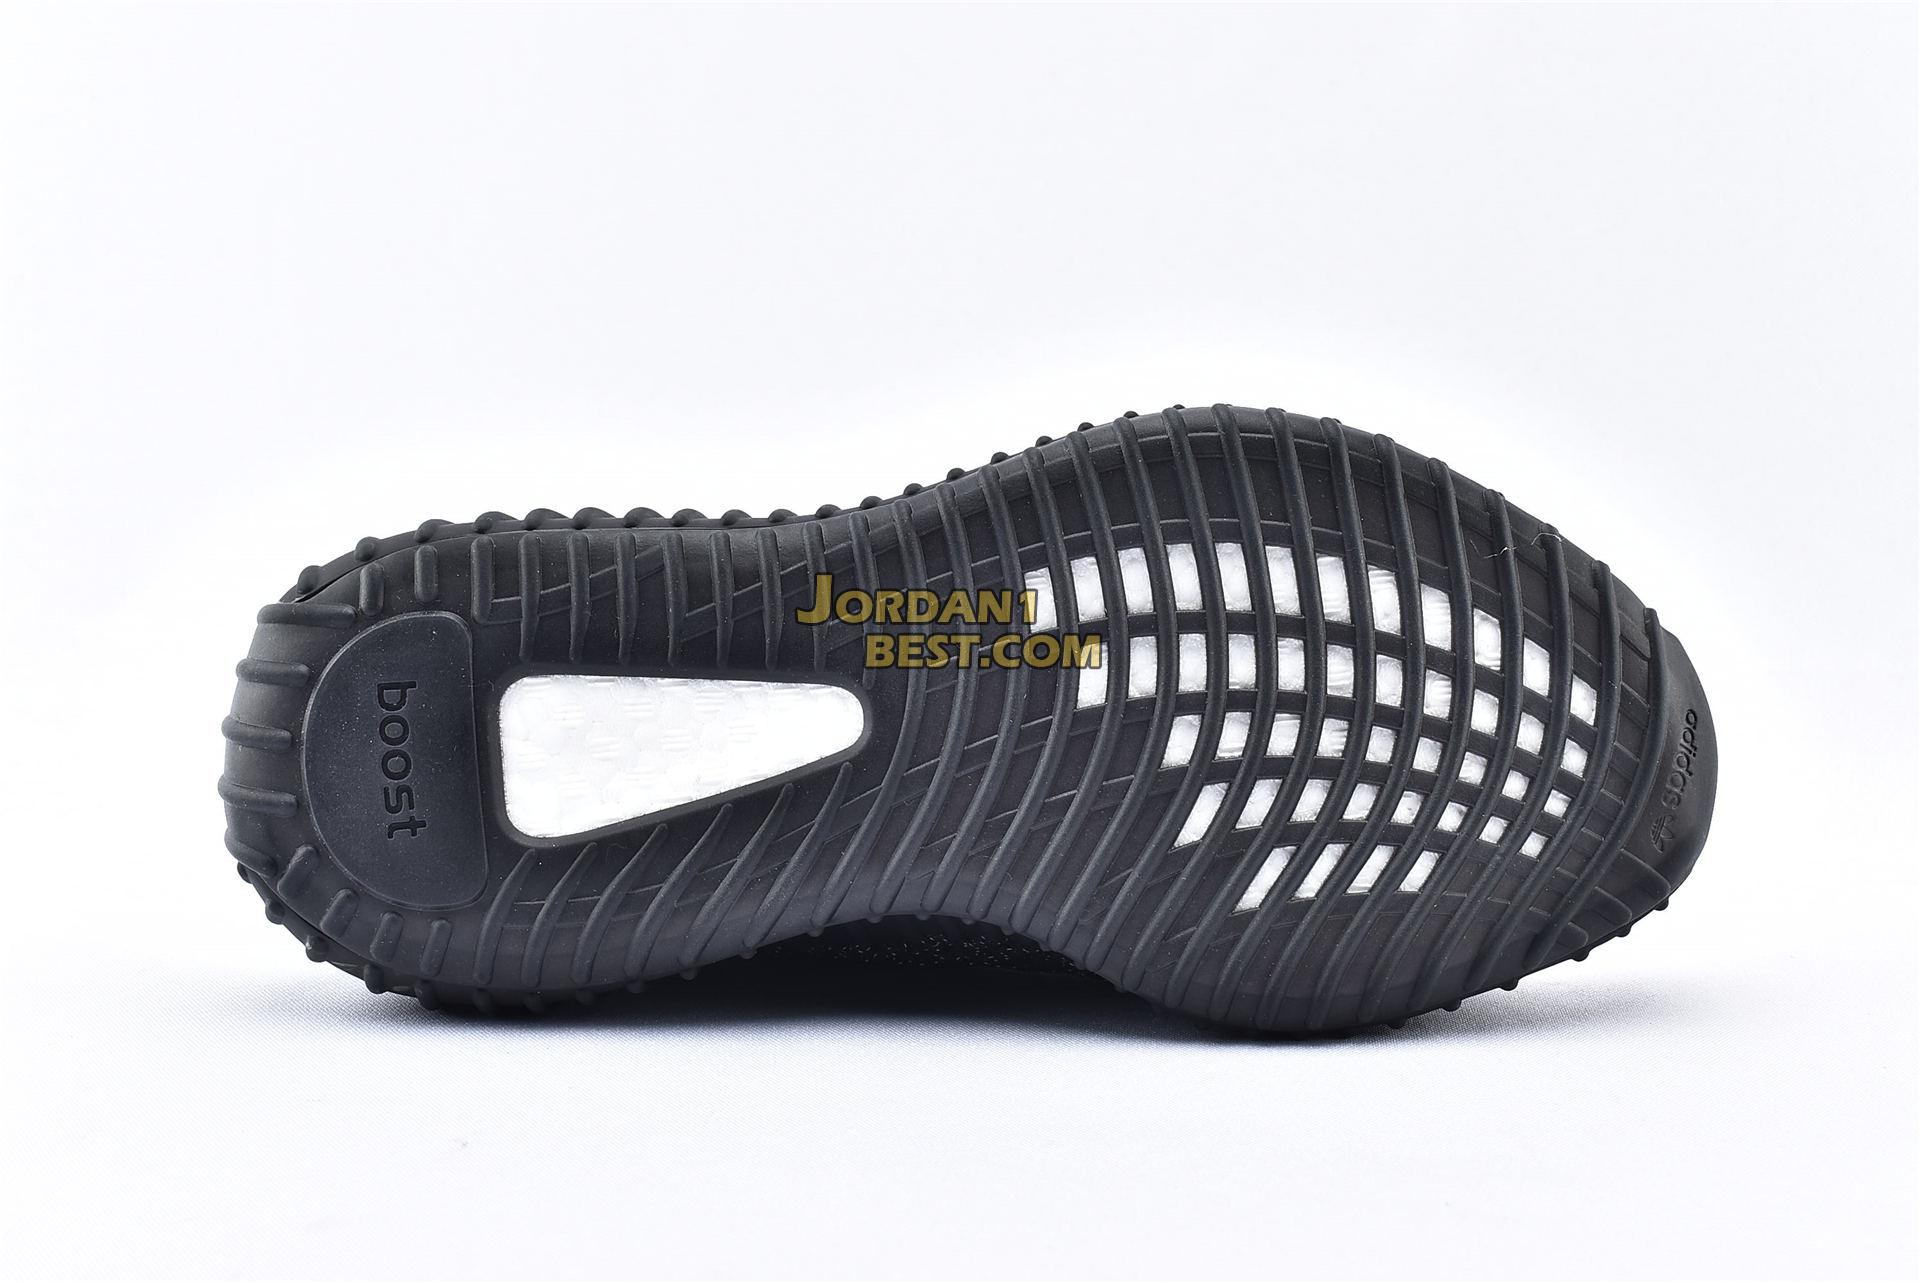 Adidas Yeezy Boost 350 V2 "Black Reflective" FU9007